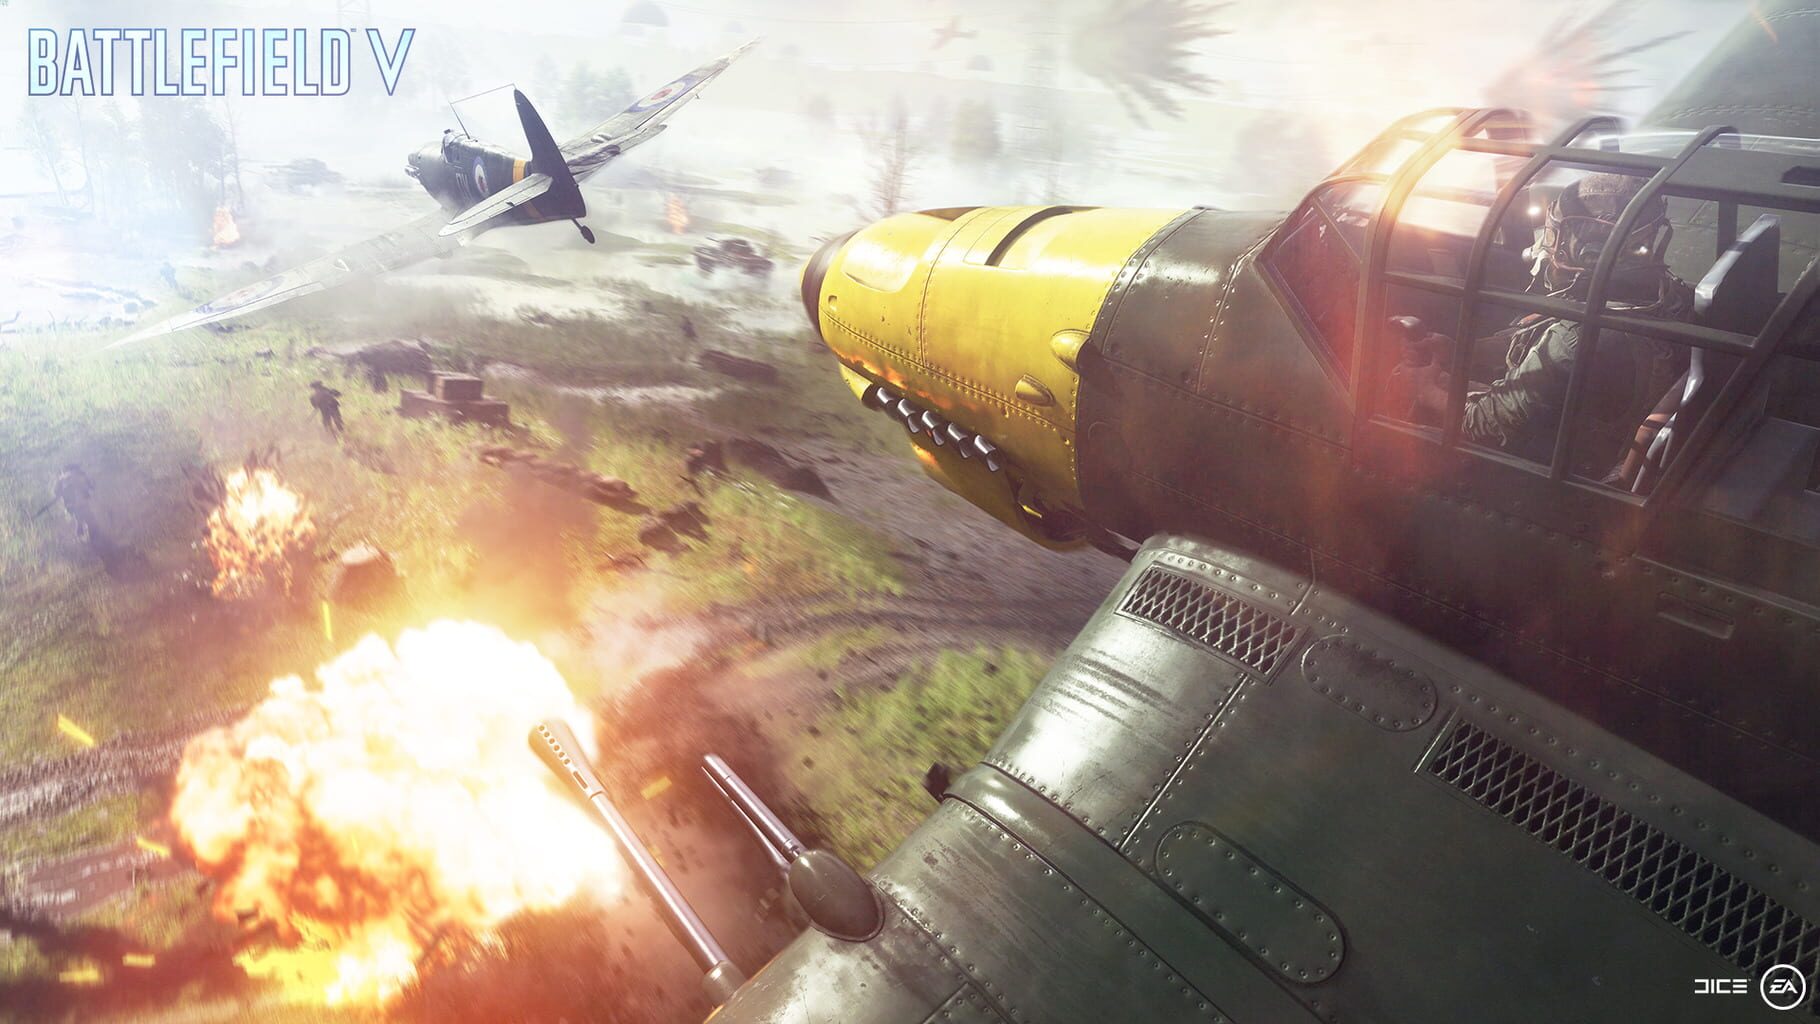 Battlefield V screenshots